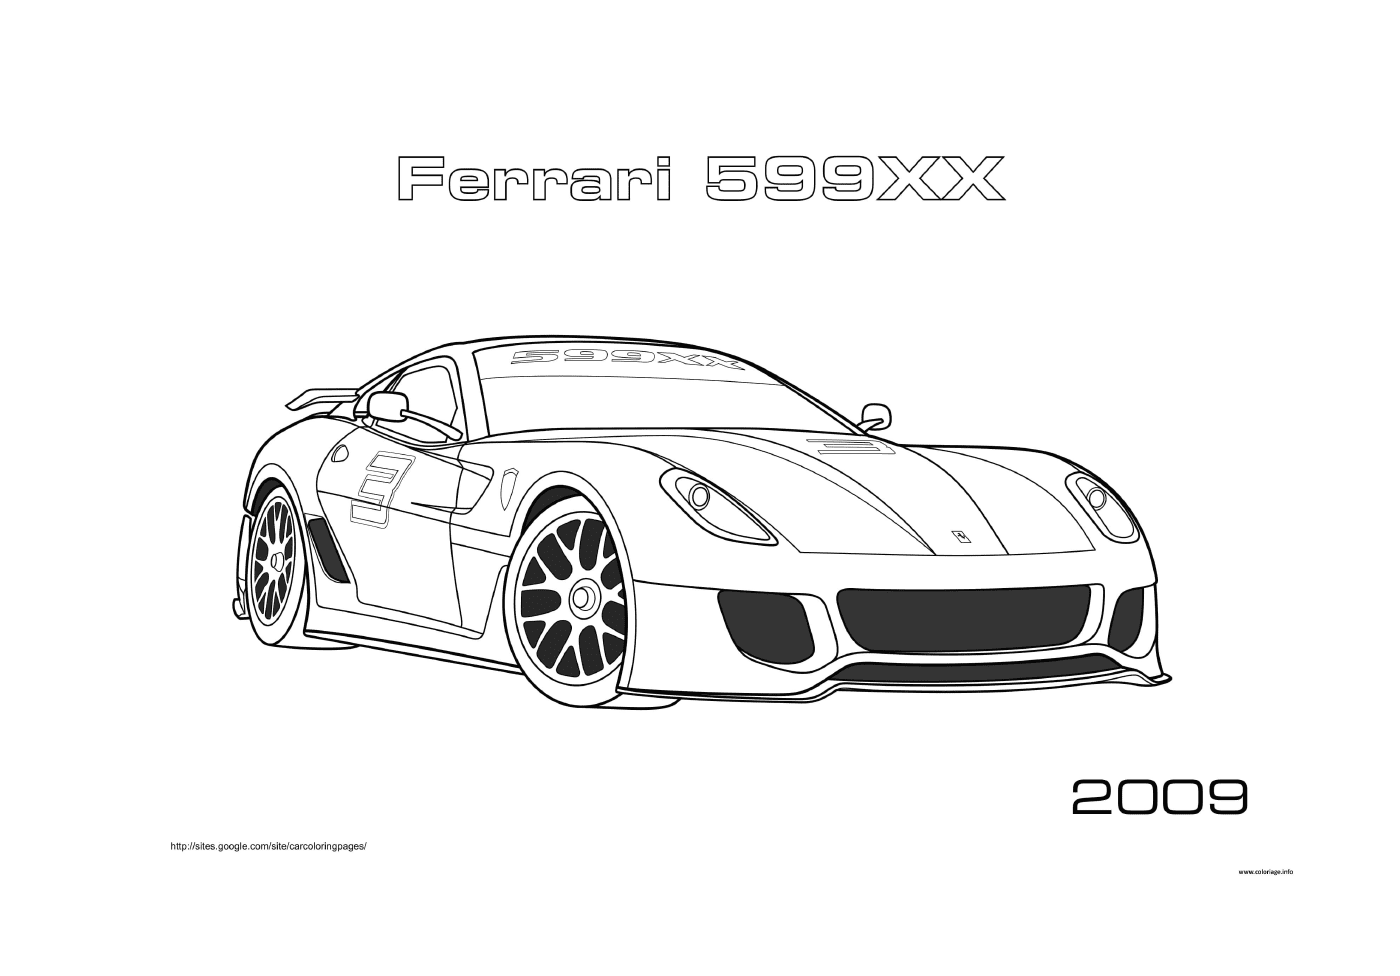  Ferrari 599XX racing car 